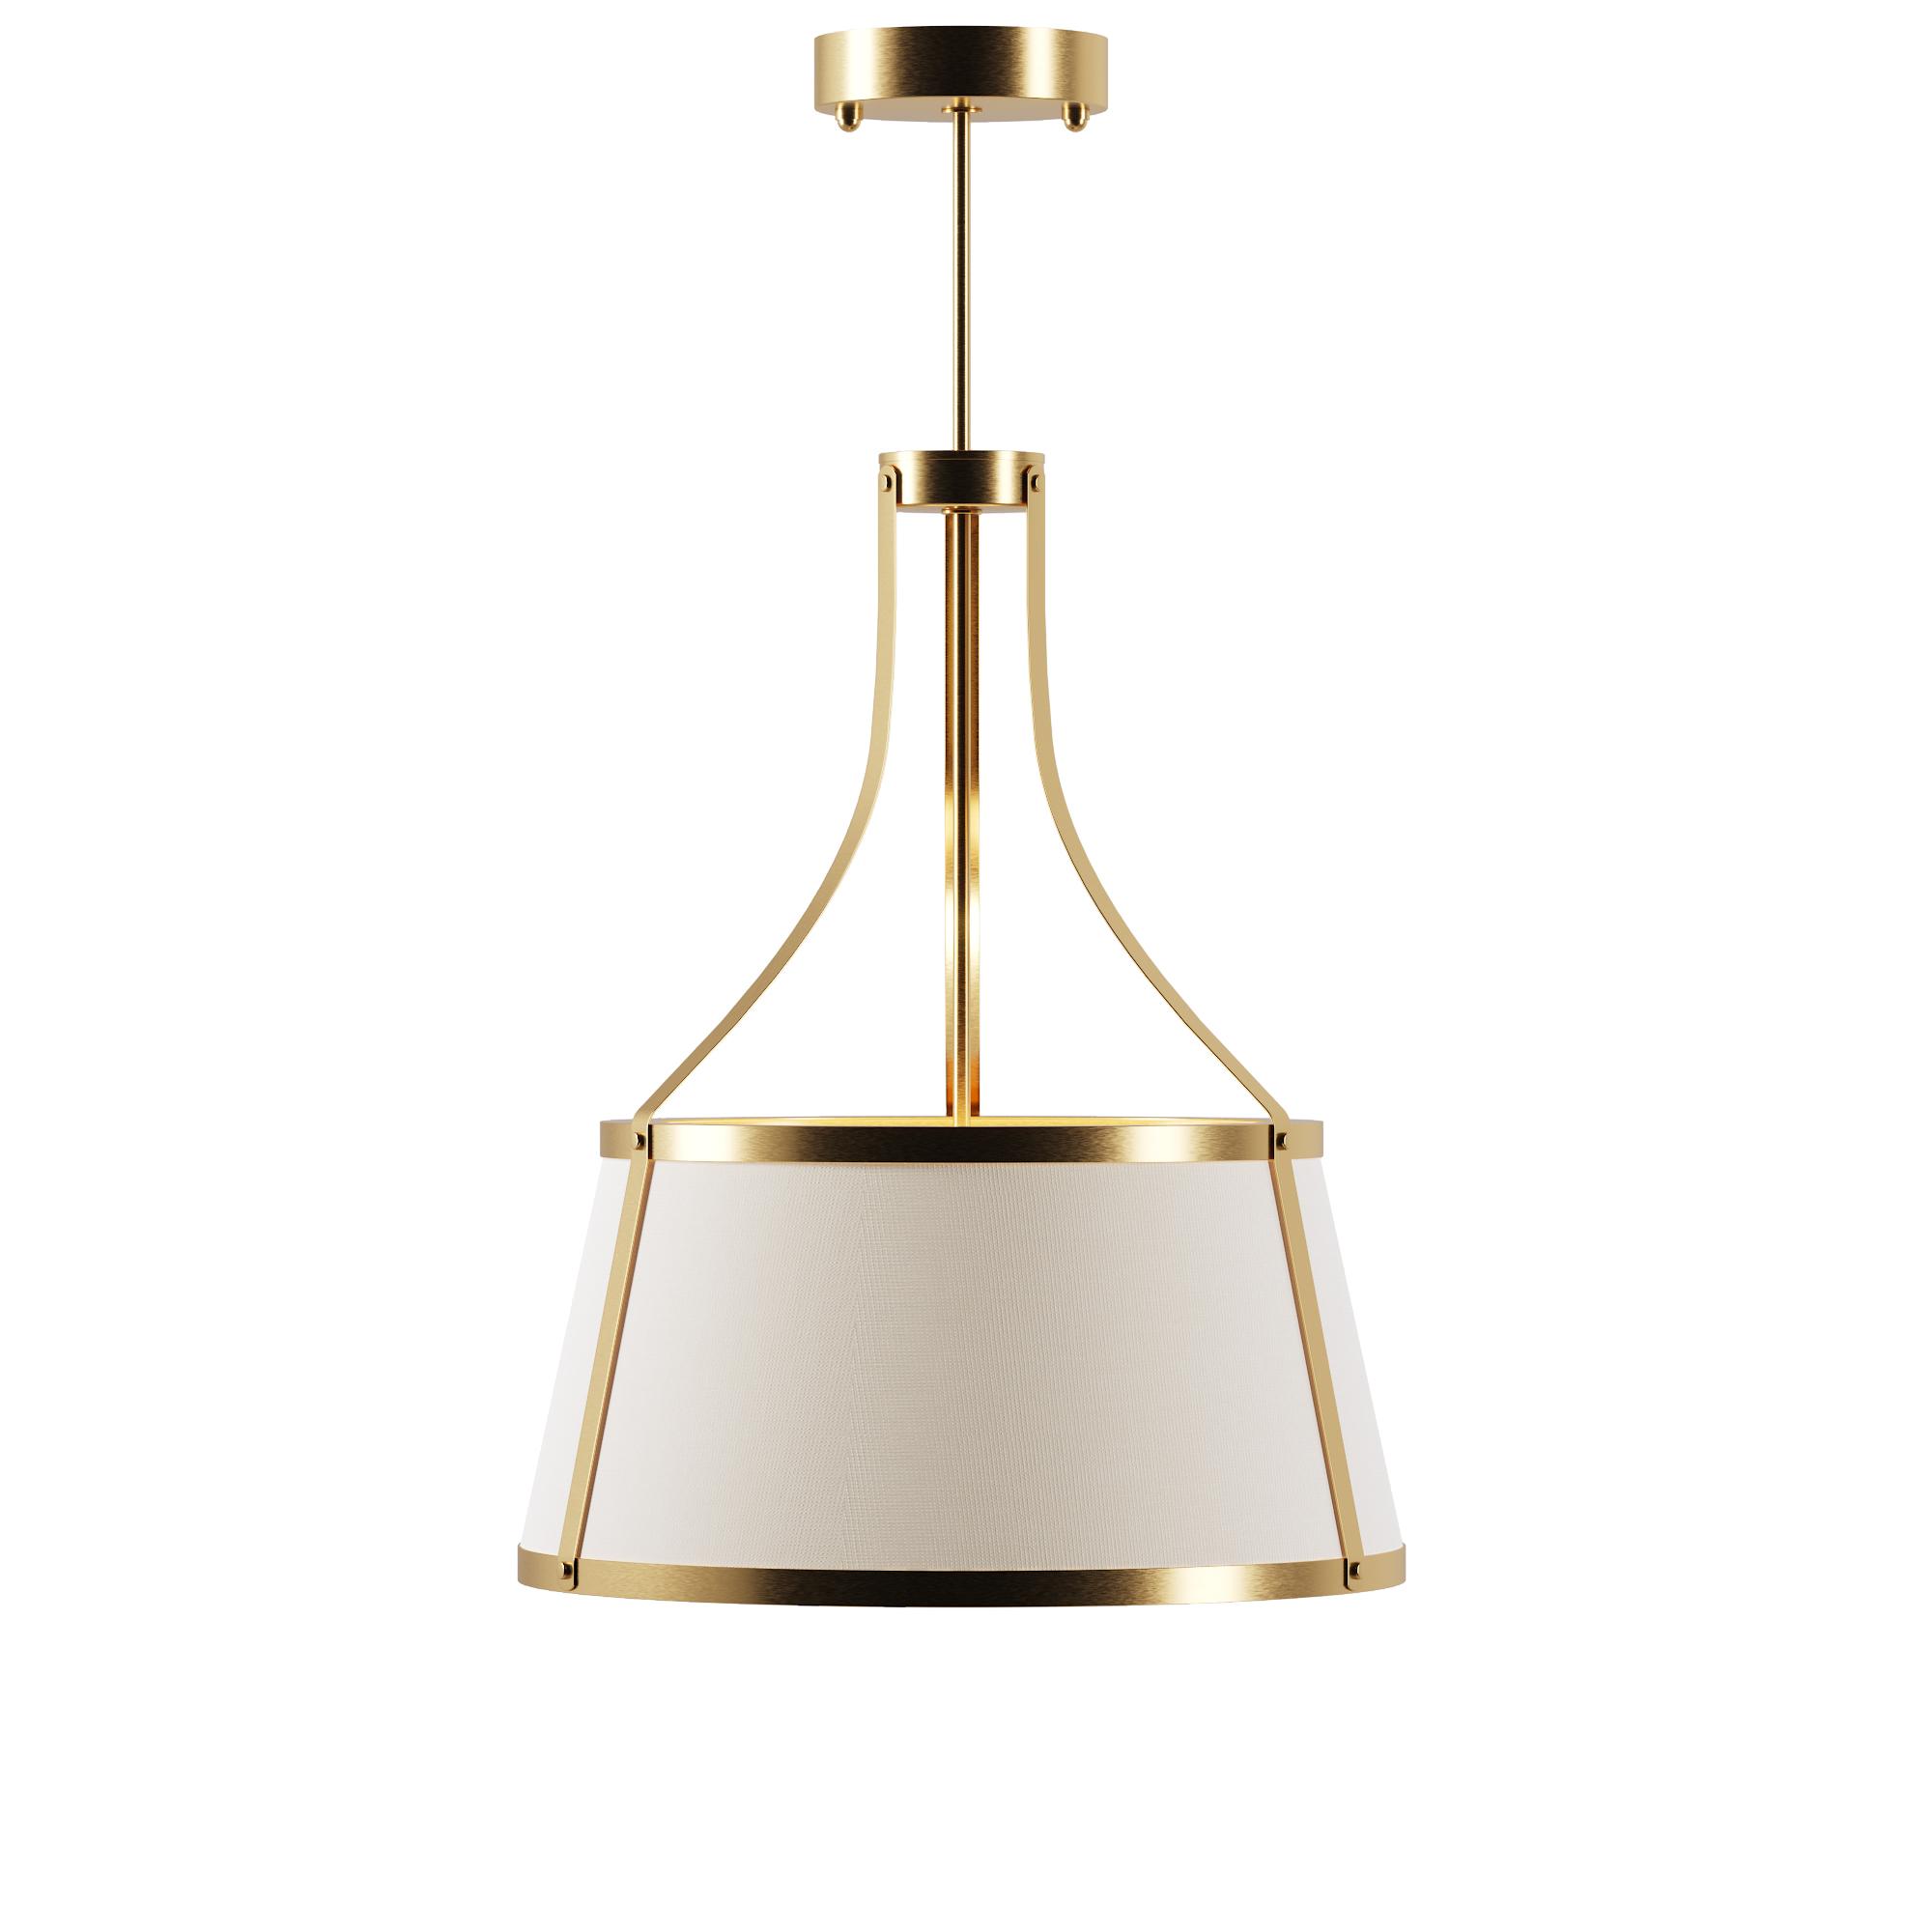 CL lamp, SKU. 5774 by Pikartlights 3d model